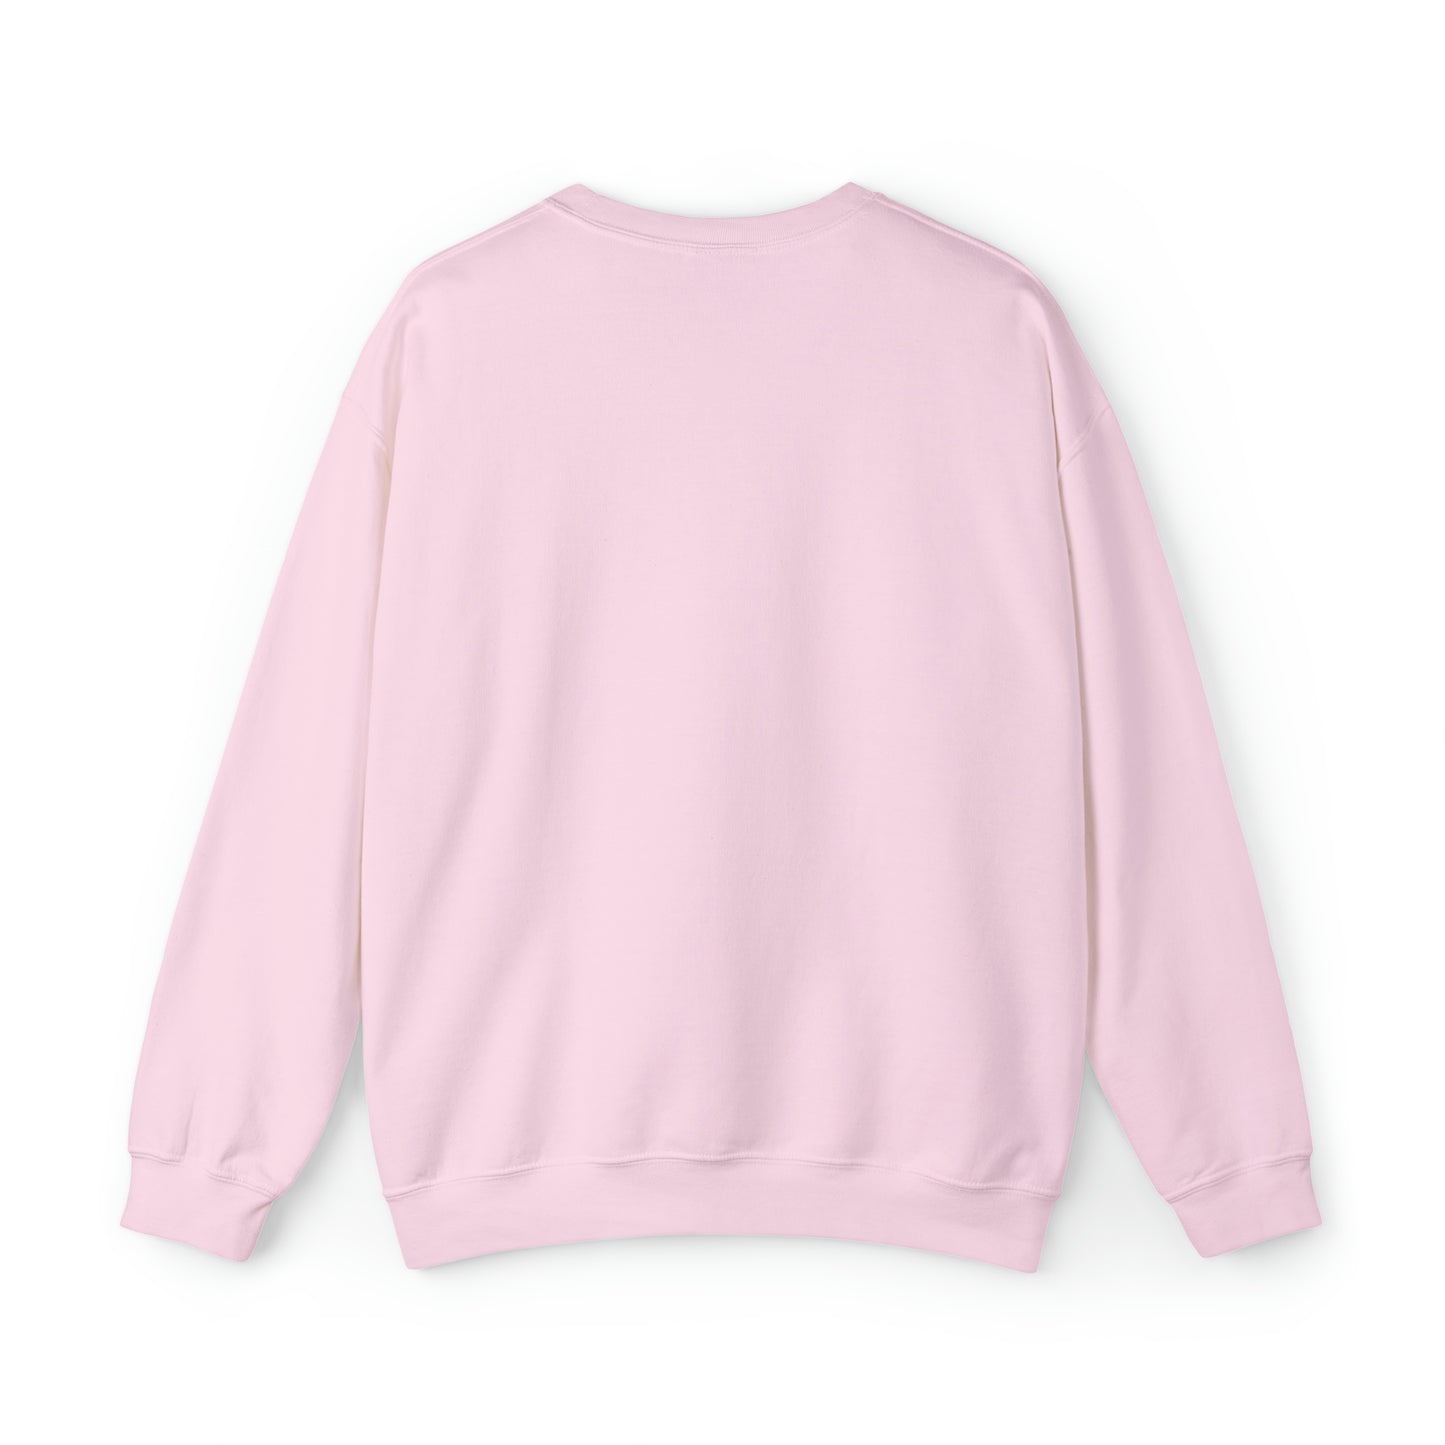 Wifey Heart Unisex Heavy Blend™ Crewneck Sweatshirt